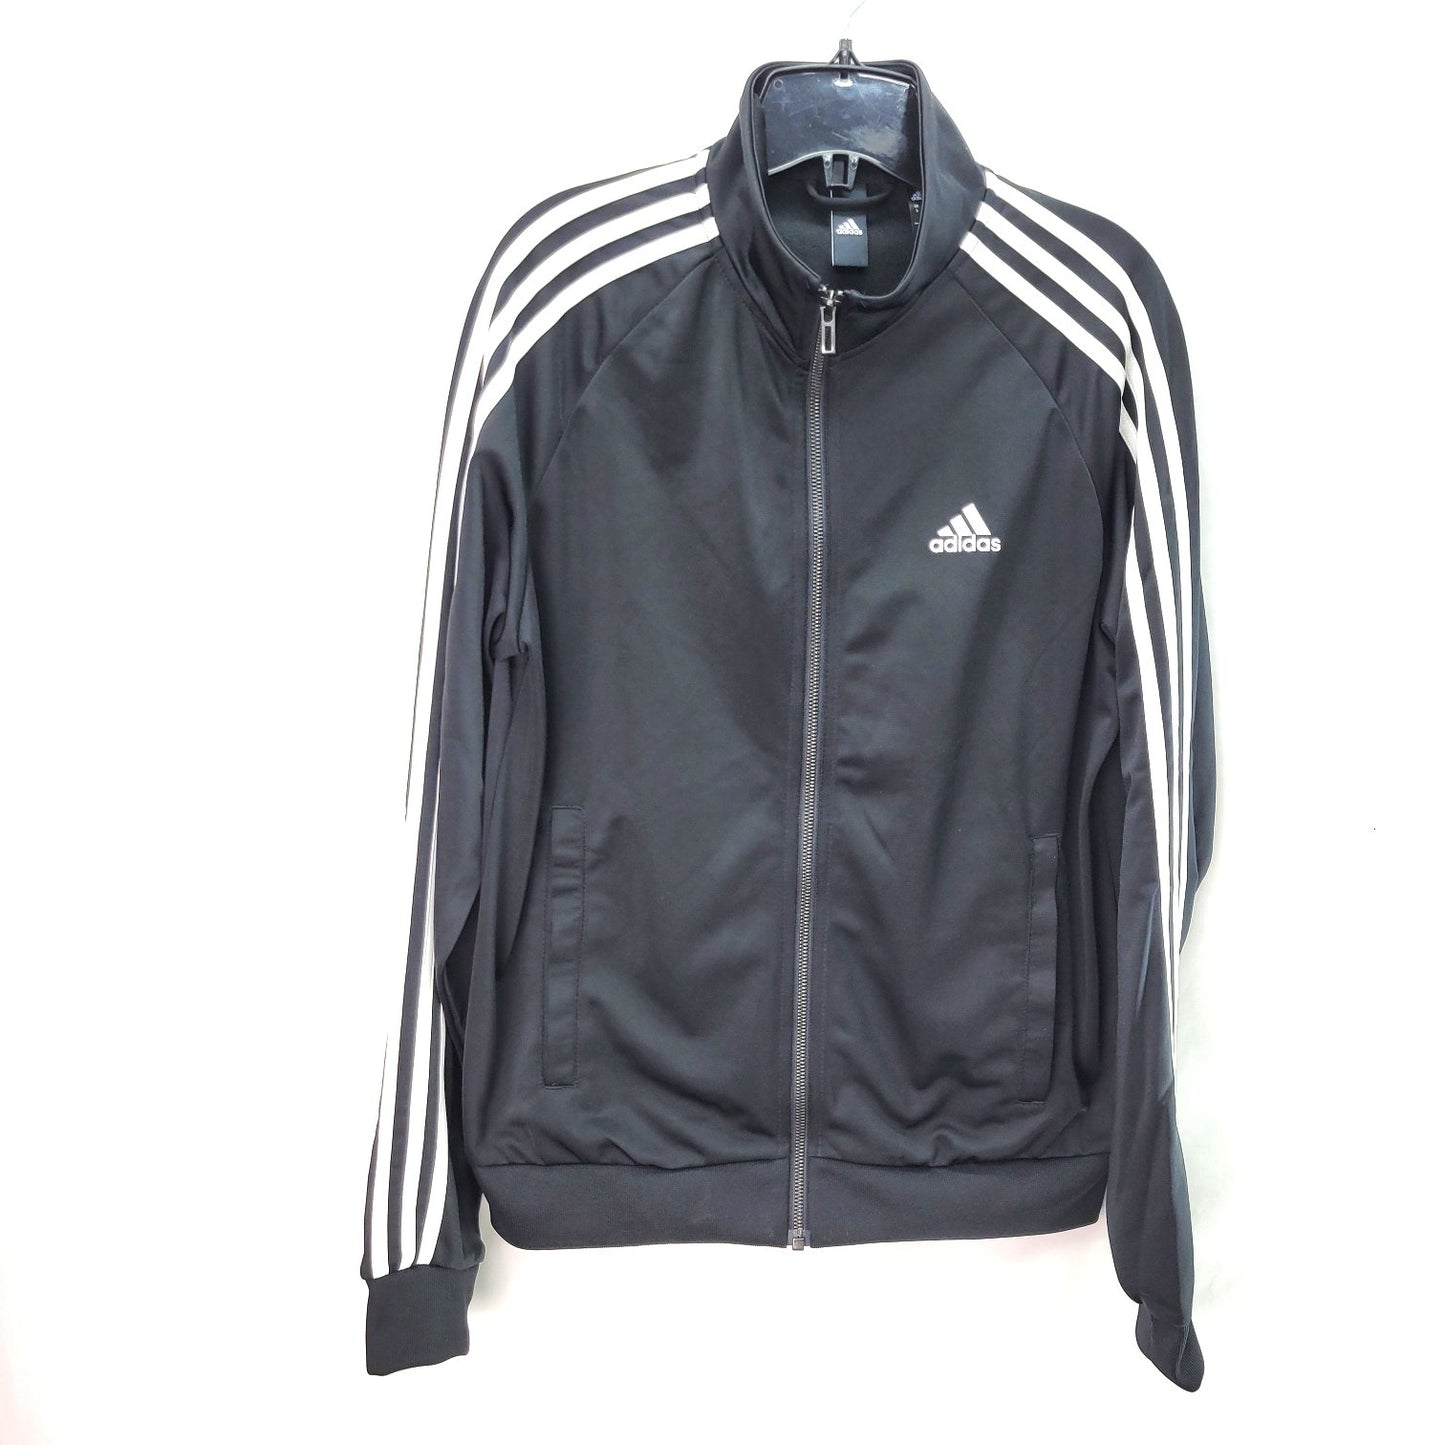 Adidas Men's Zip-Up Light Jacket Black/White - Small